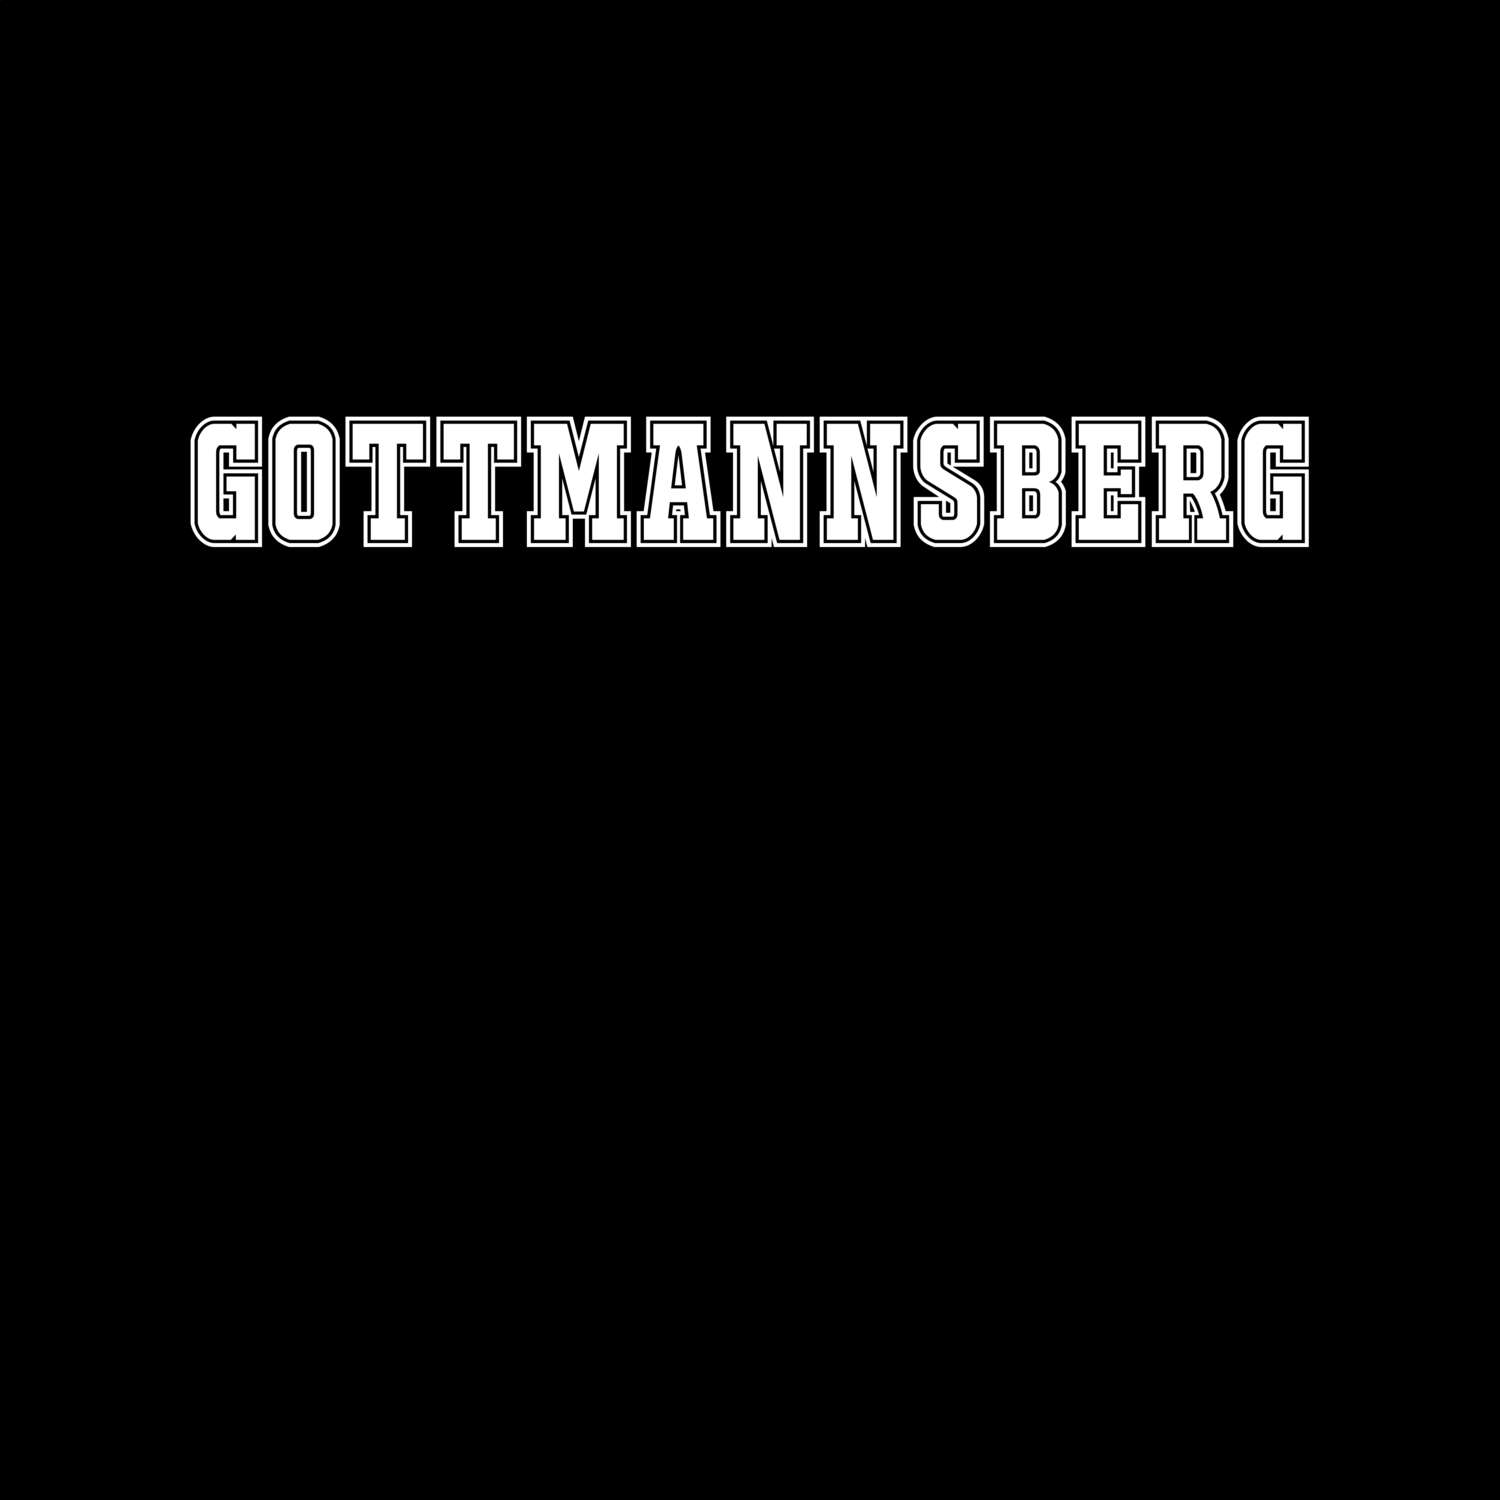 Gottmannsberg T-Shirt »Classic«